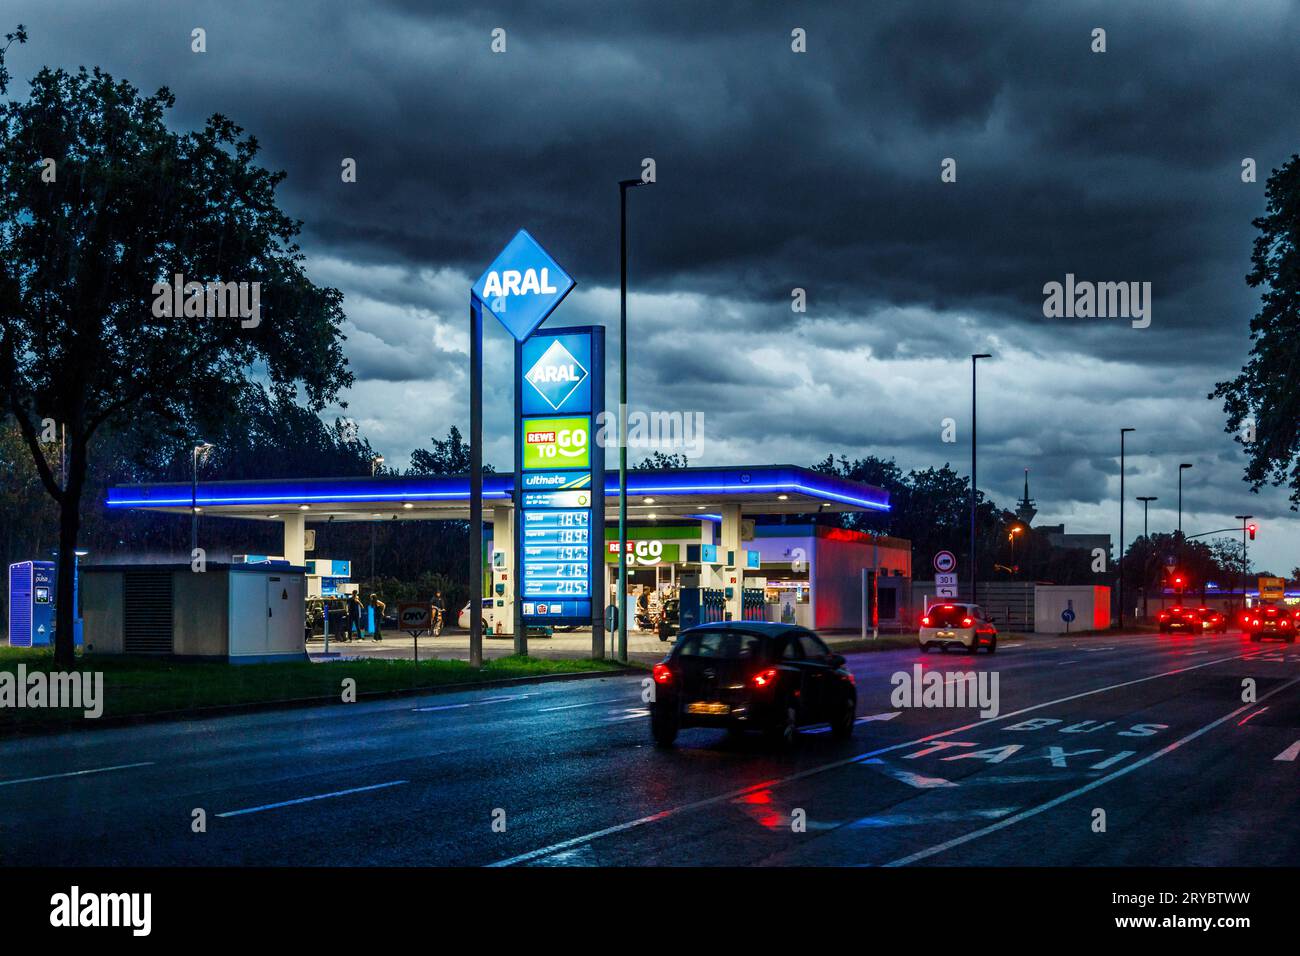 Gewitterfront über Düsseldorf, Aral Tankstelle *** Thunderstorm front over Düsseldorf, Aral gas station Credit: Imago/Alamy Live News Stock Photo